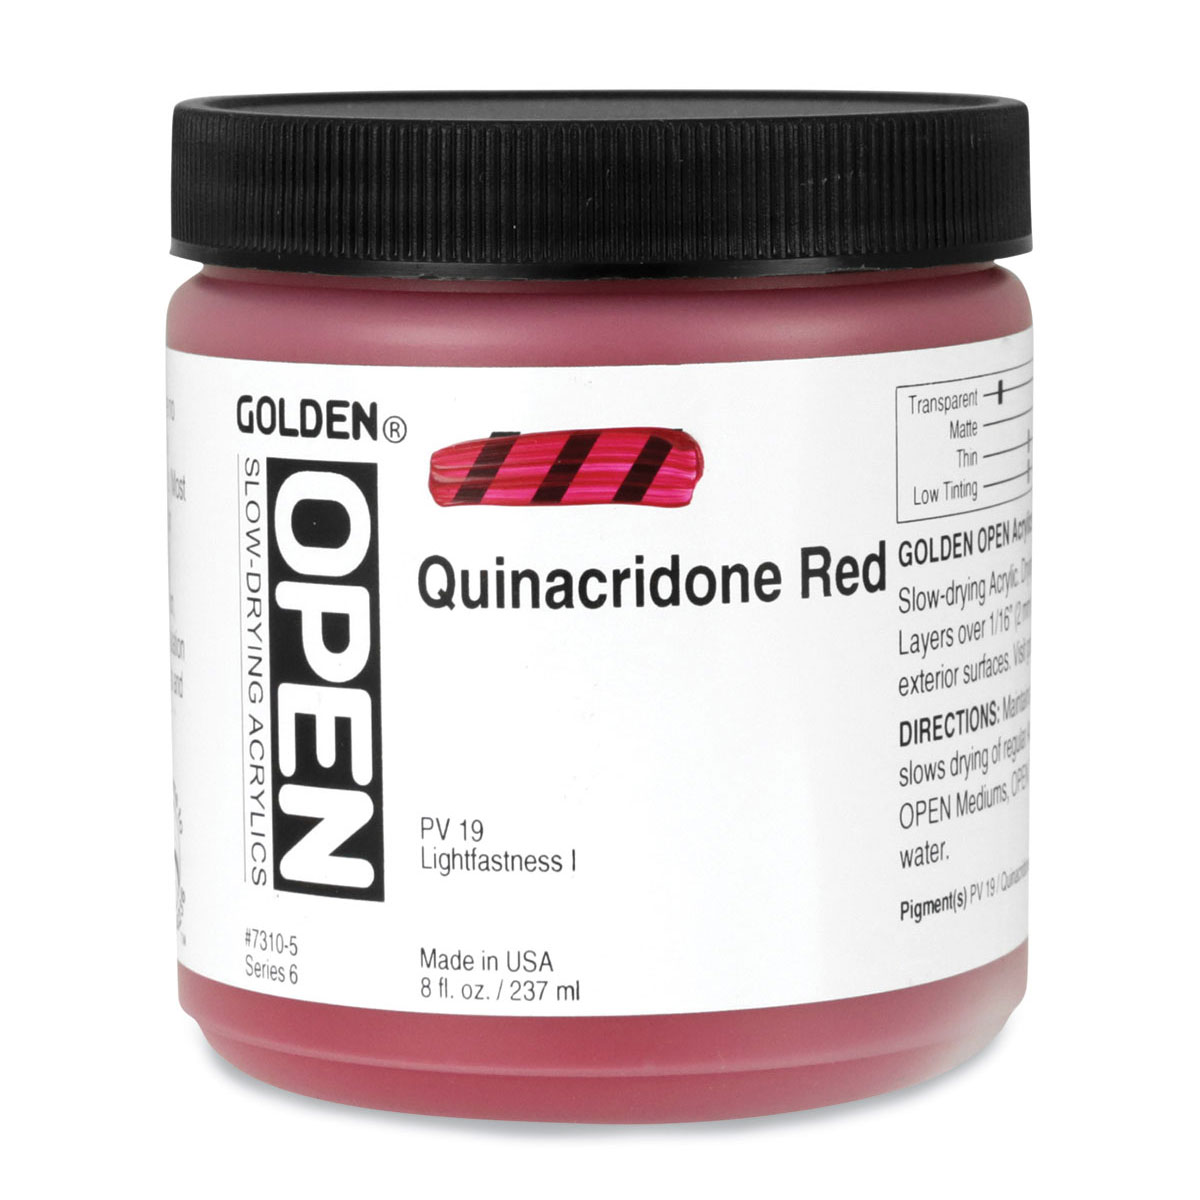 Golden Open Acrylics - Quinacridone Red, 8 oz Jar